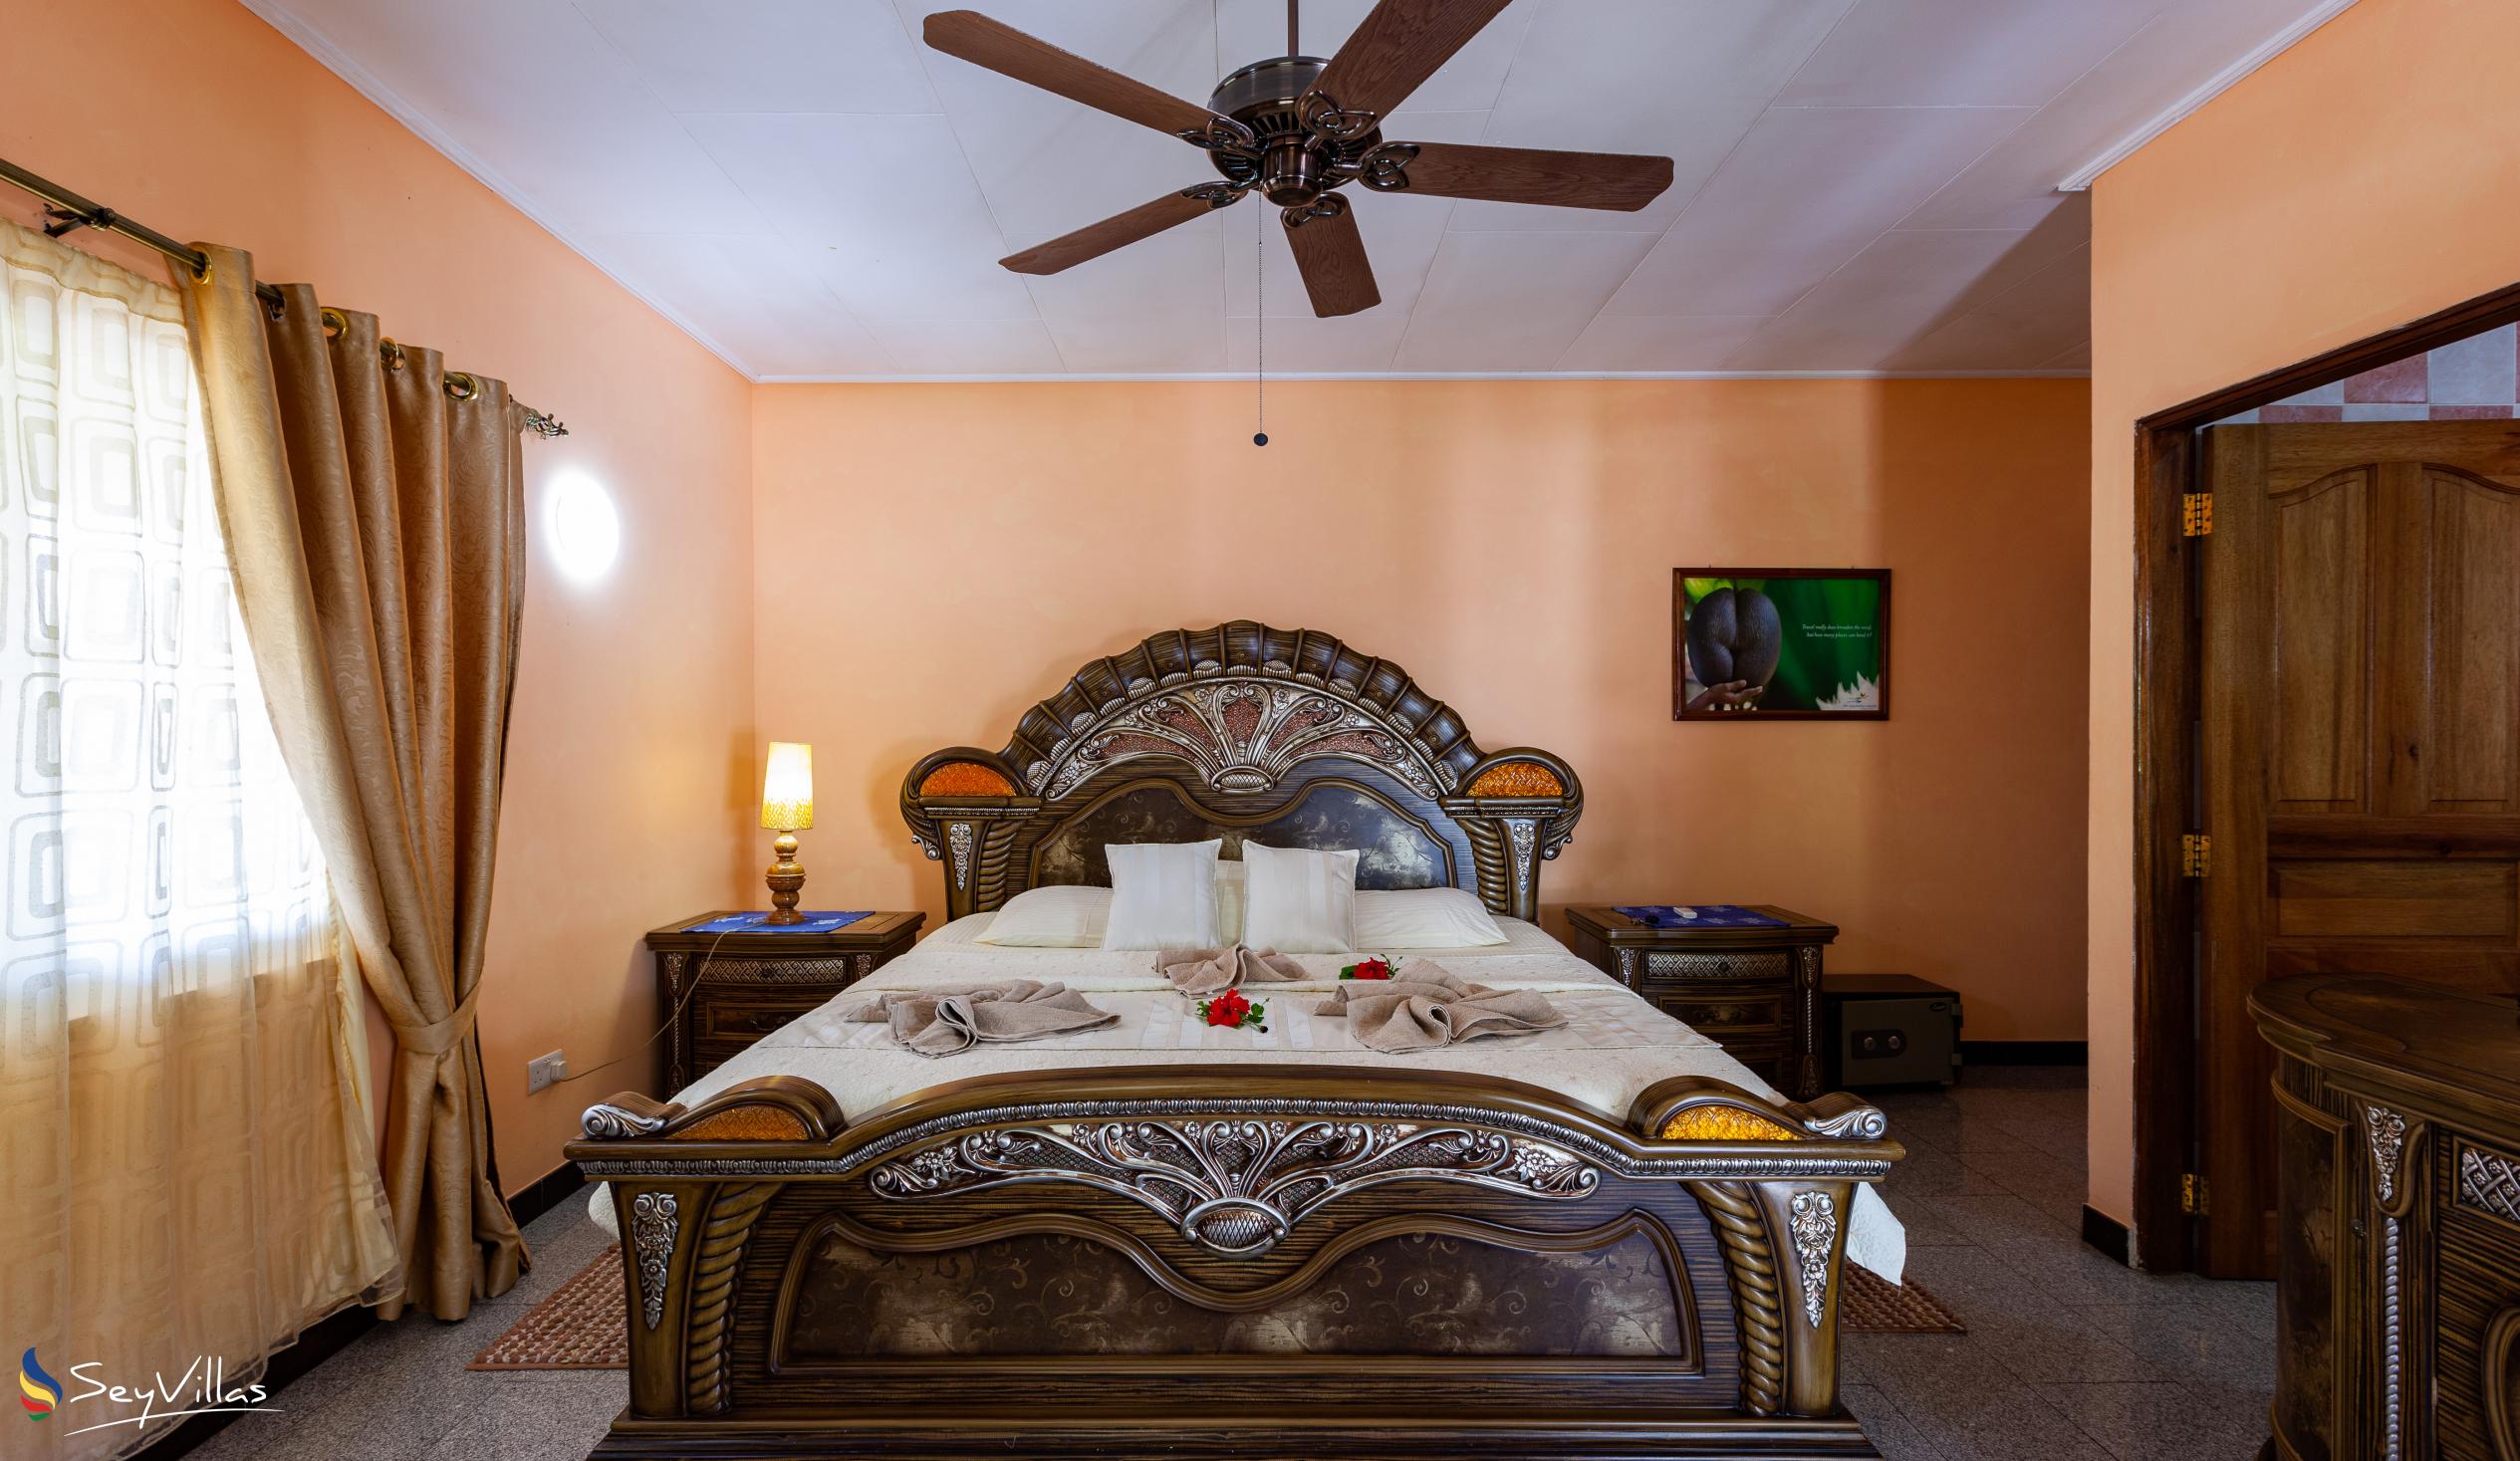 Photo 116: Villa Bananier - Superior Room - Praslin (Seychelles)